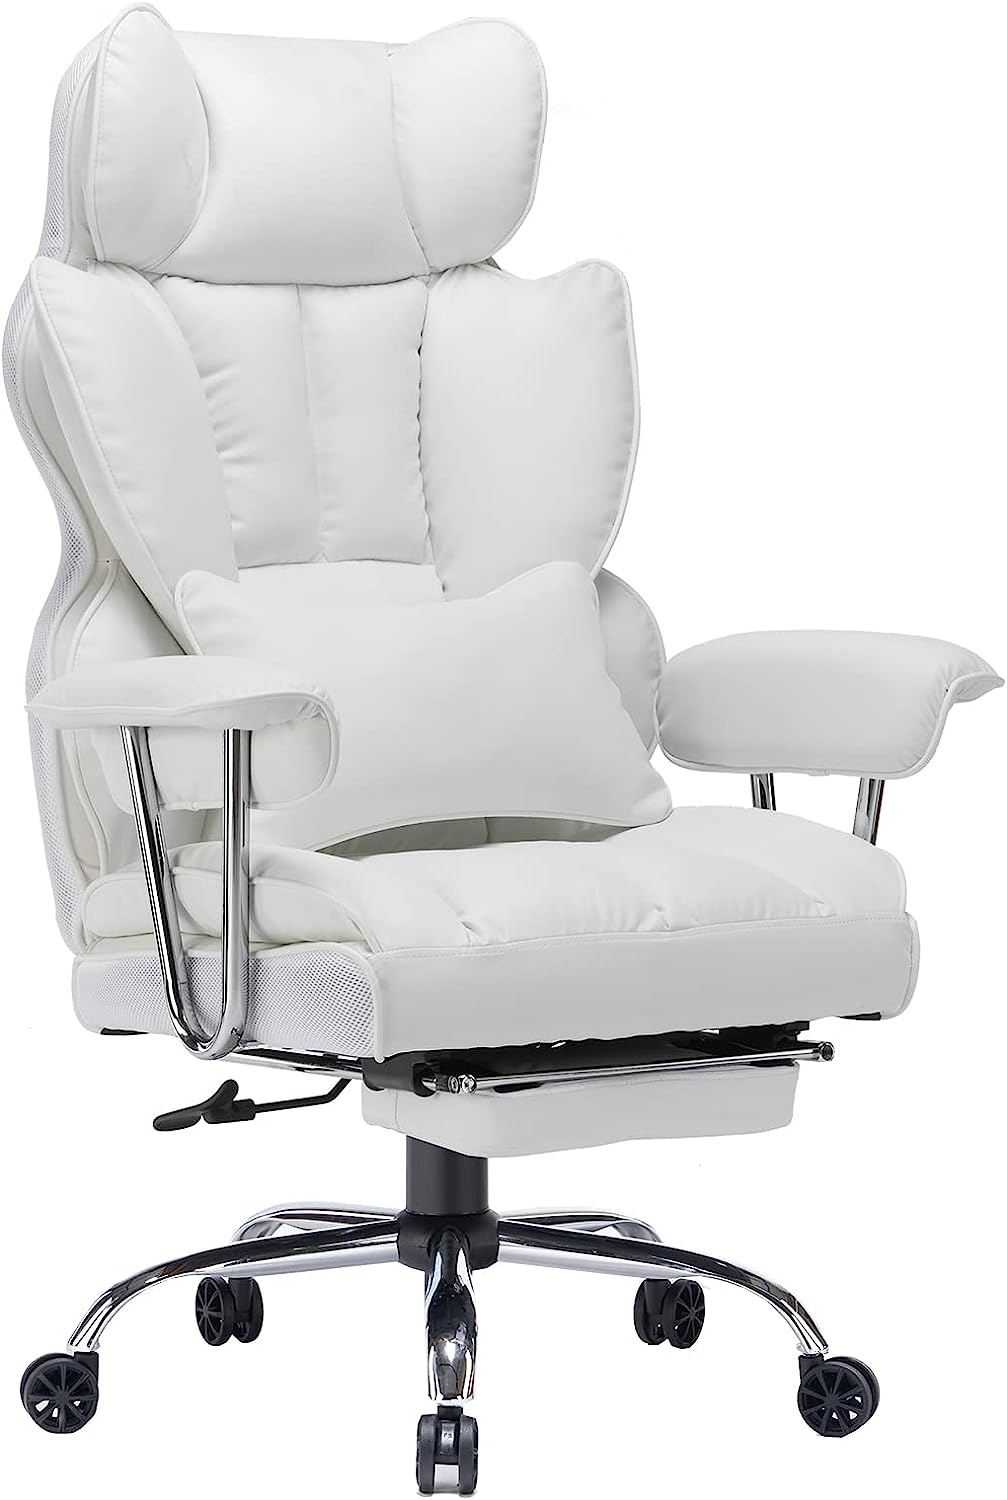 Efomao Desk Office Chair,High Back Office [...]